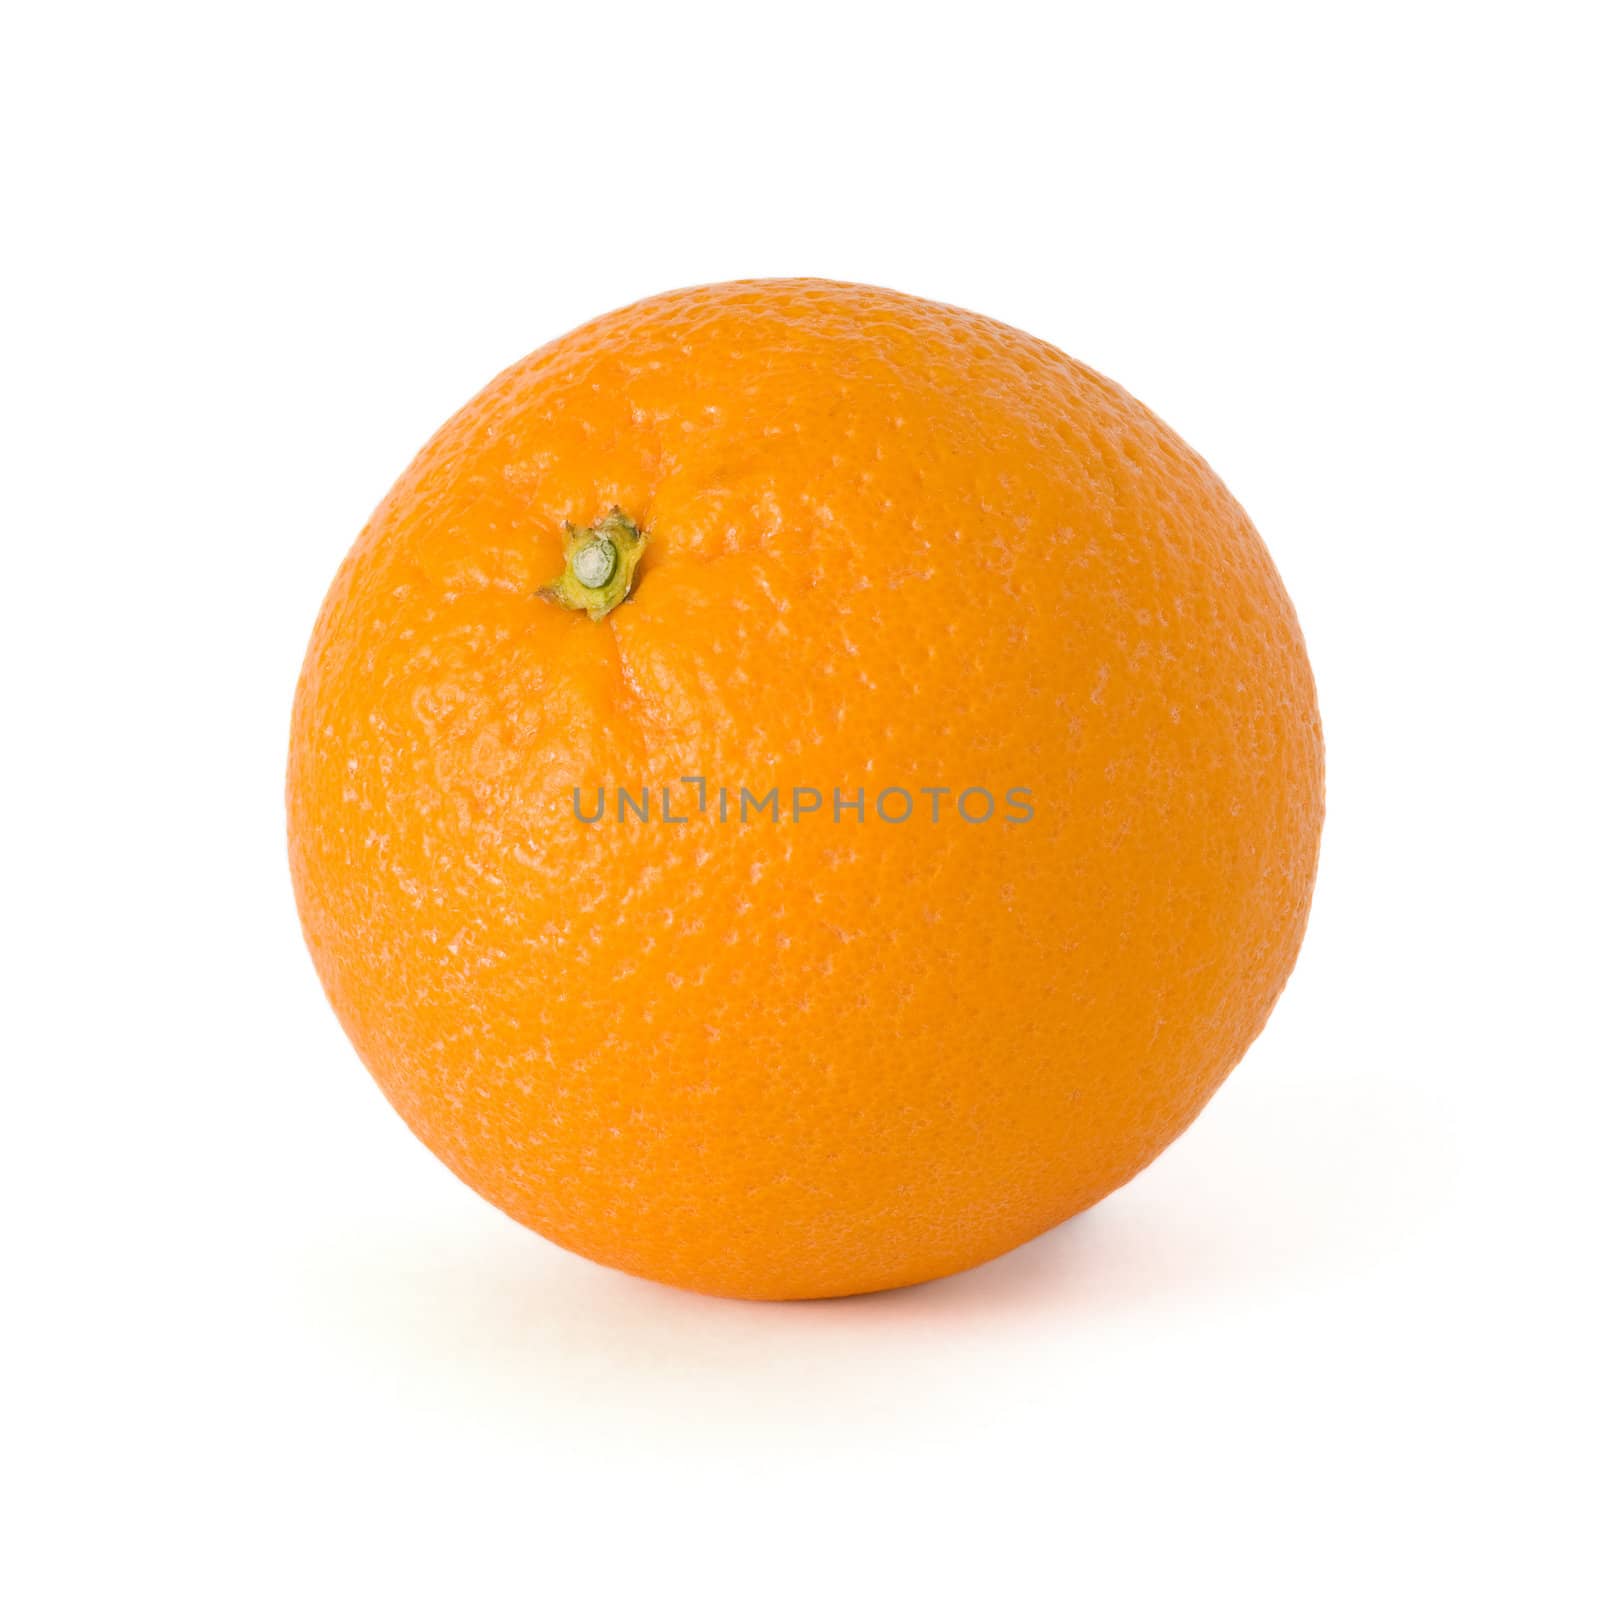 Orange by maxkrasnov